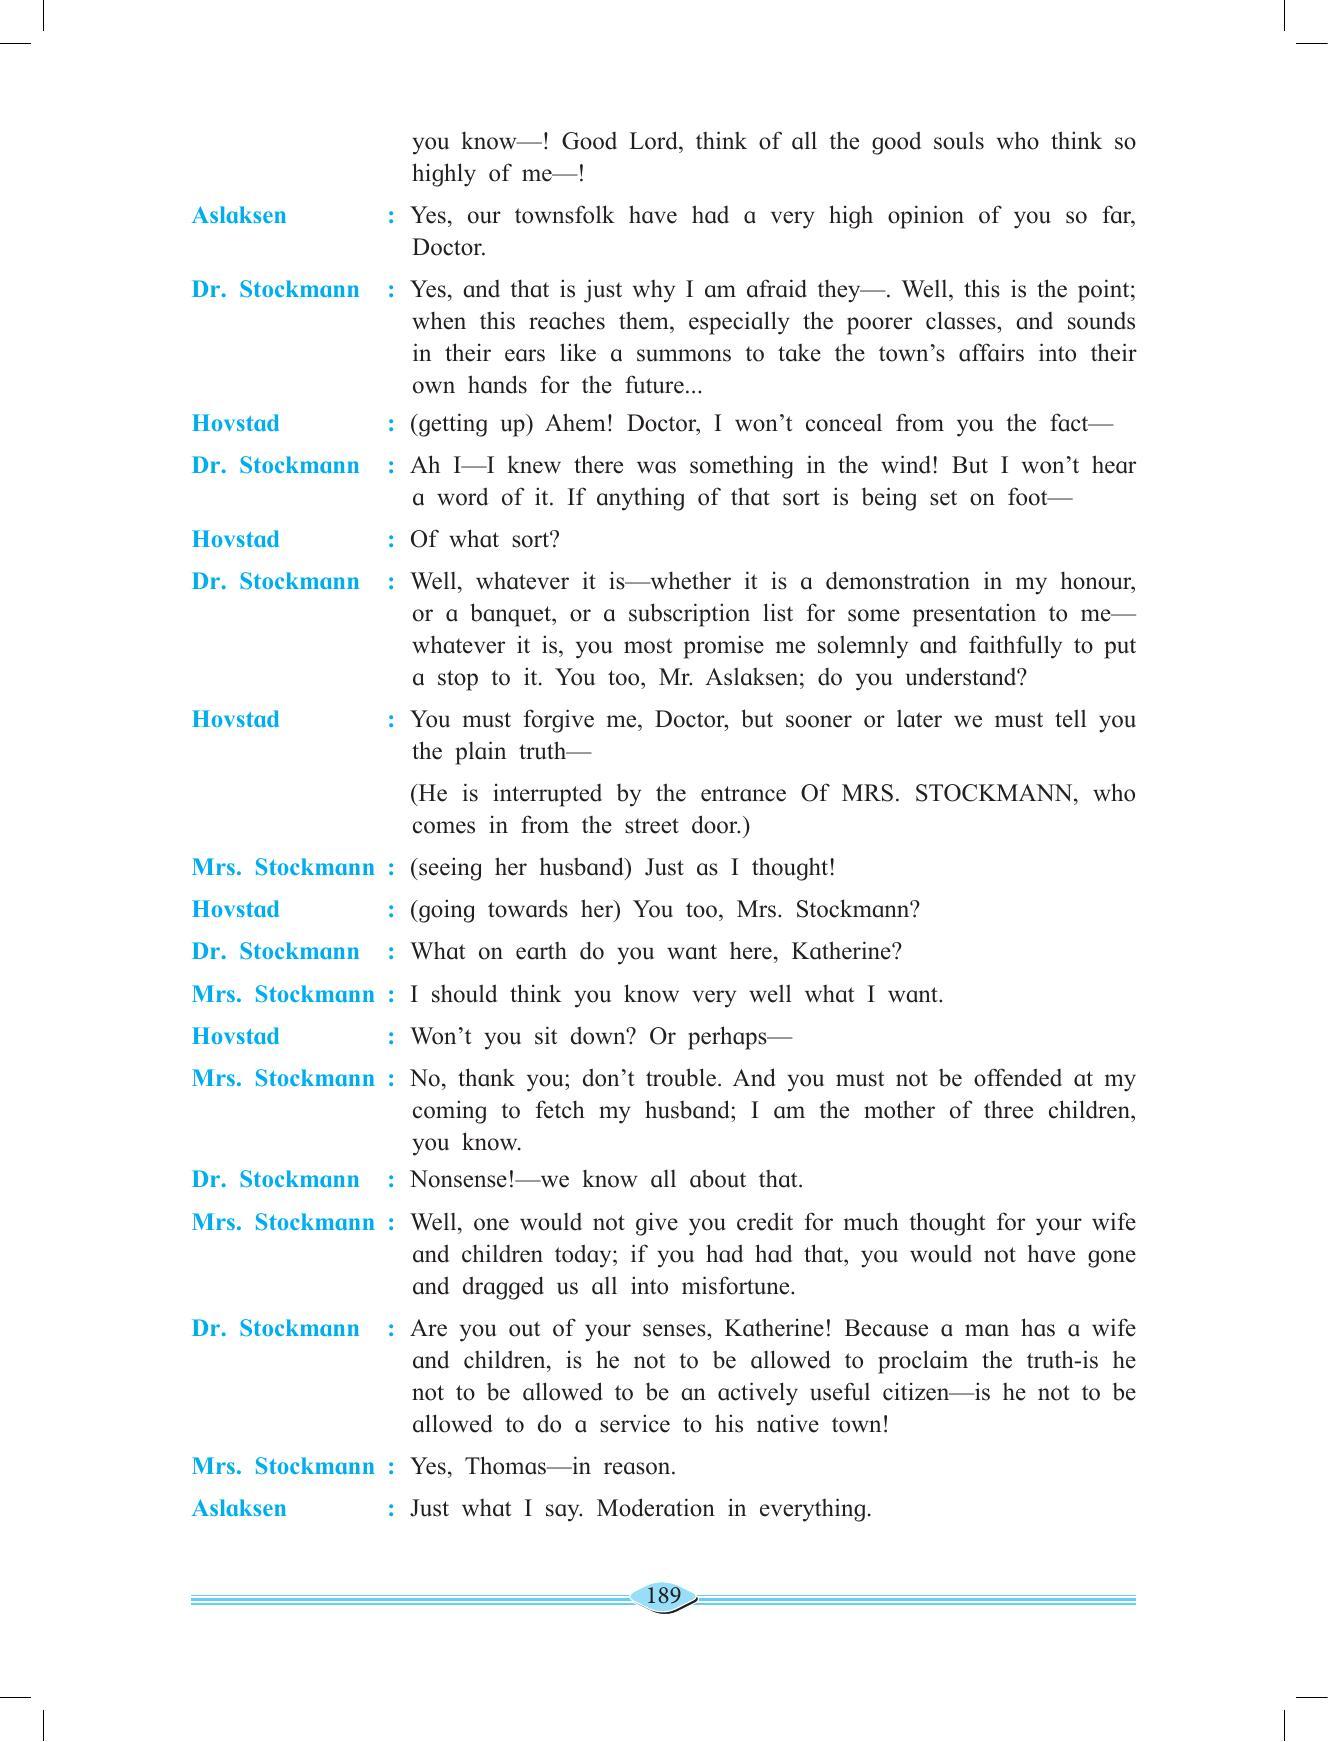 Maharashtra Board Class 11 English Textbook - Page 203